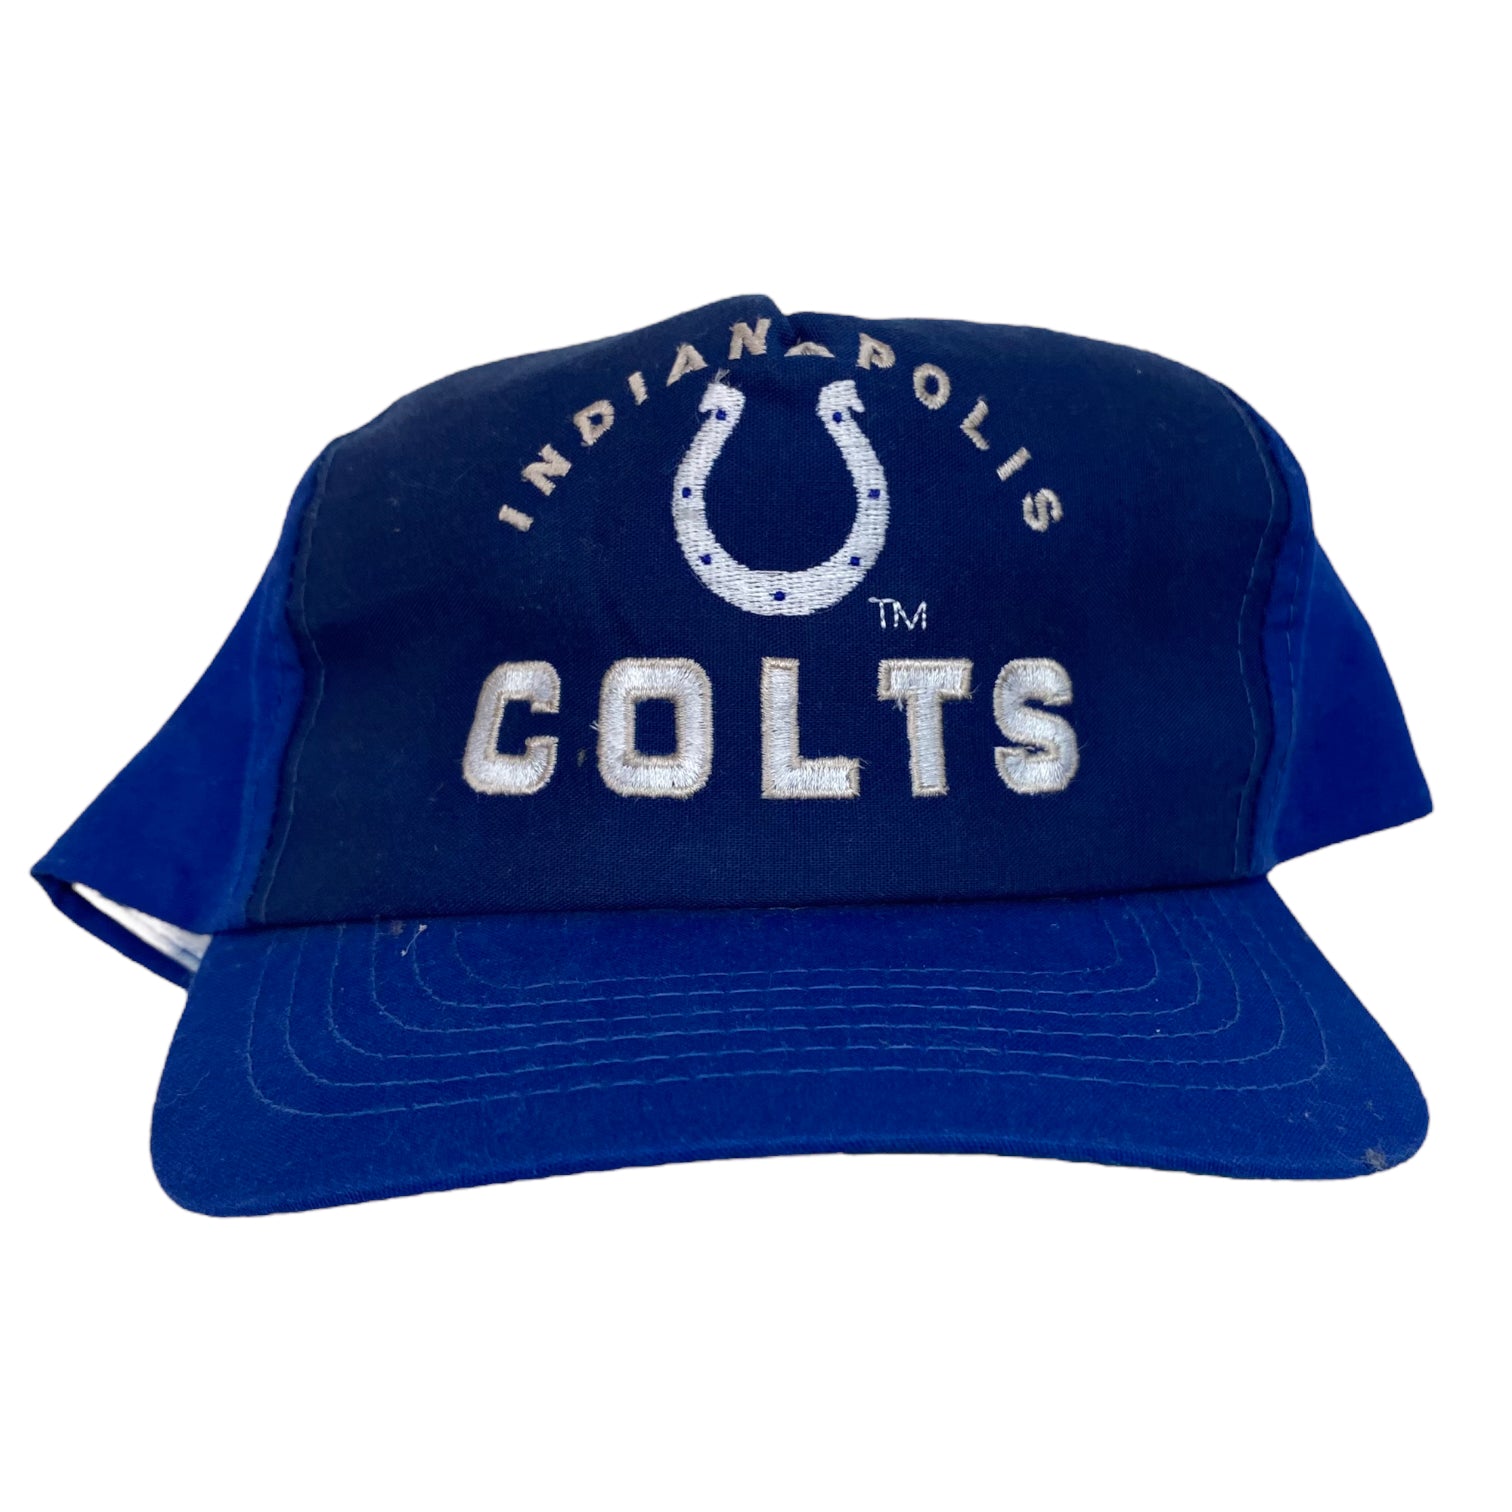 Vintage Indianapolis Colts Snapback